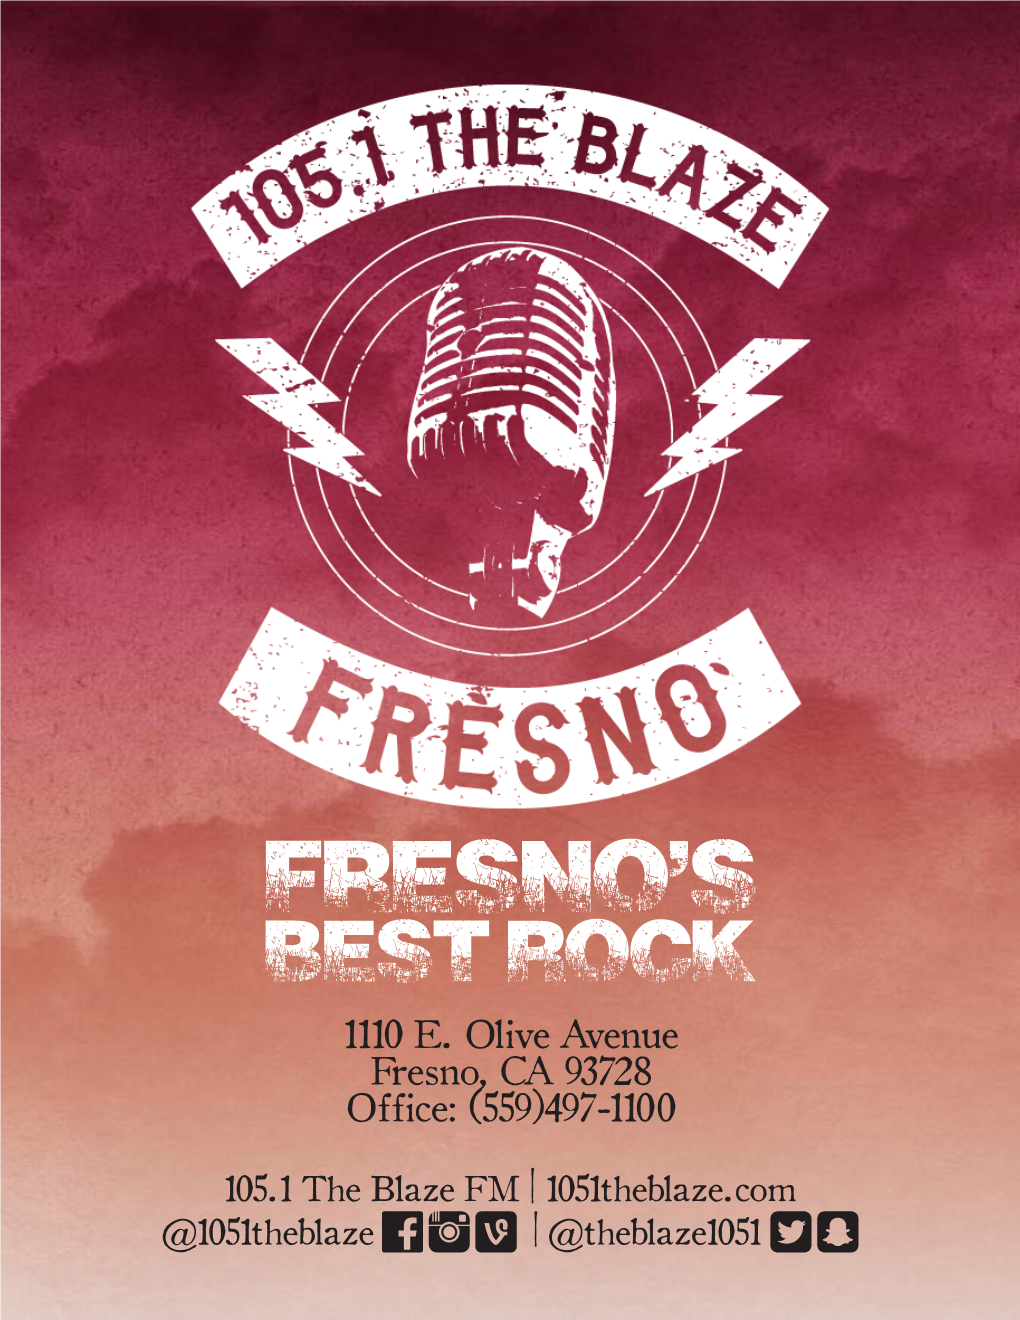 1110 E. Olive Avenue Fresno, CA 93728 Office: (559)497-1100 Station Profile